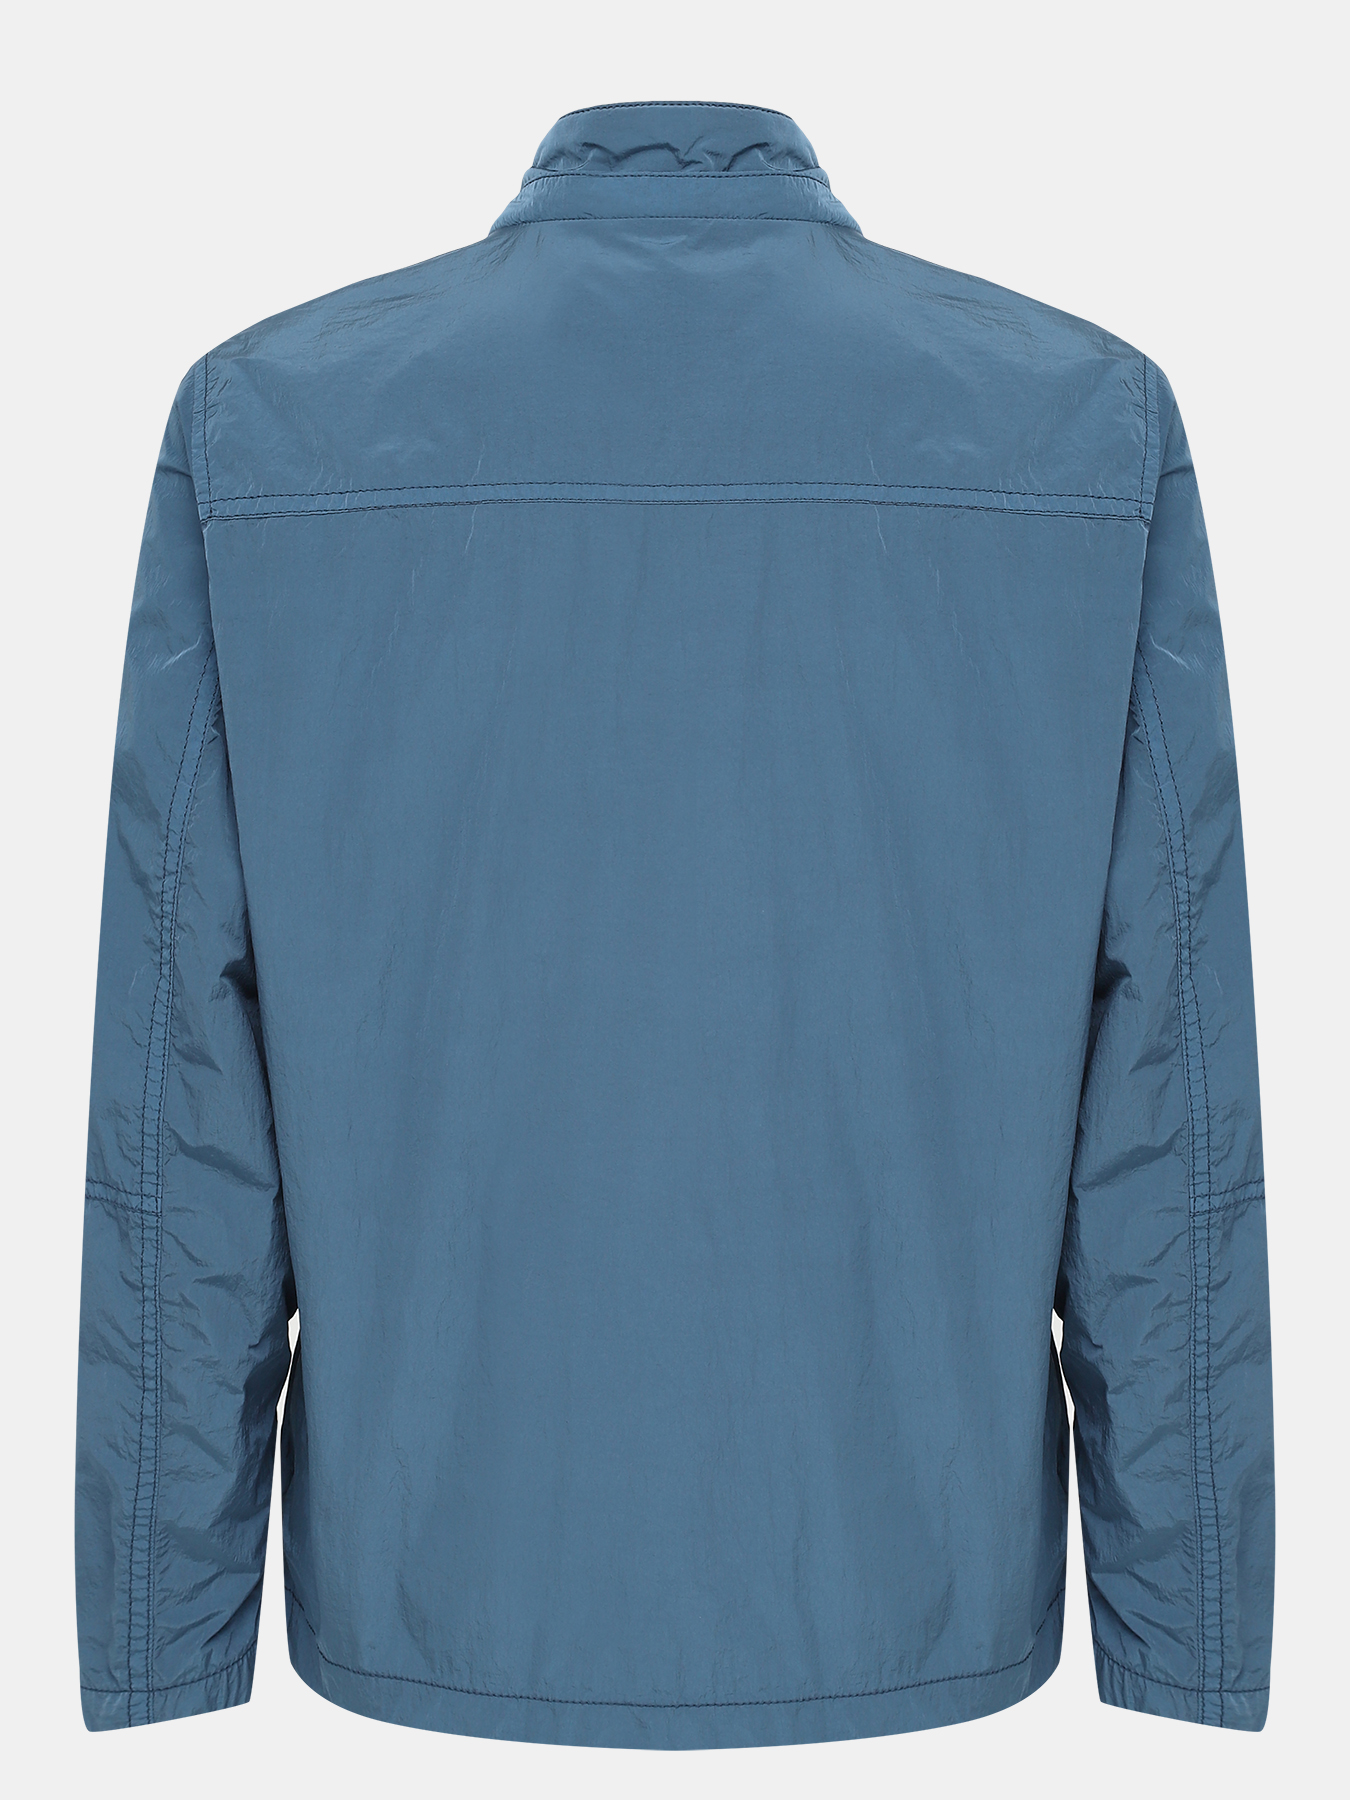 Куртка Odell D BOSS 421179-027, цвет синий, размер 52 - фото 3